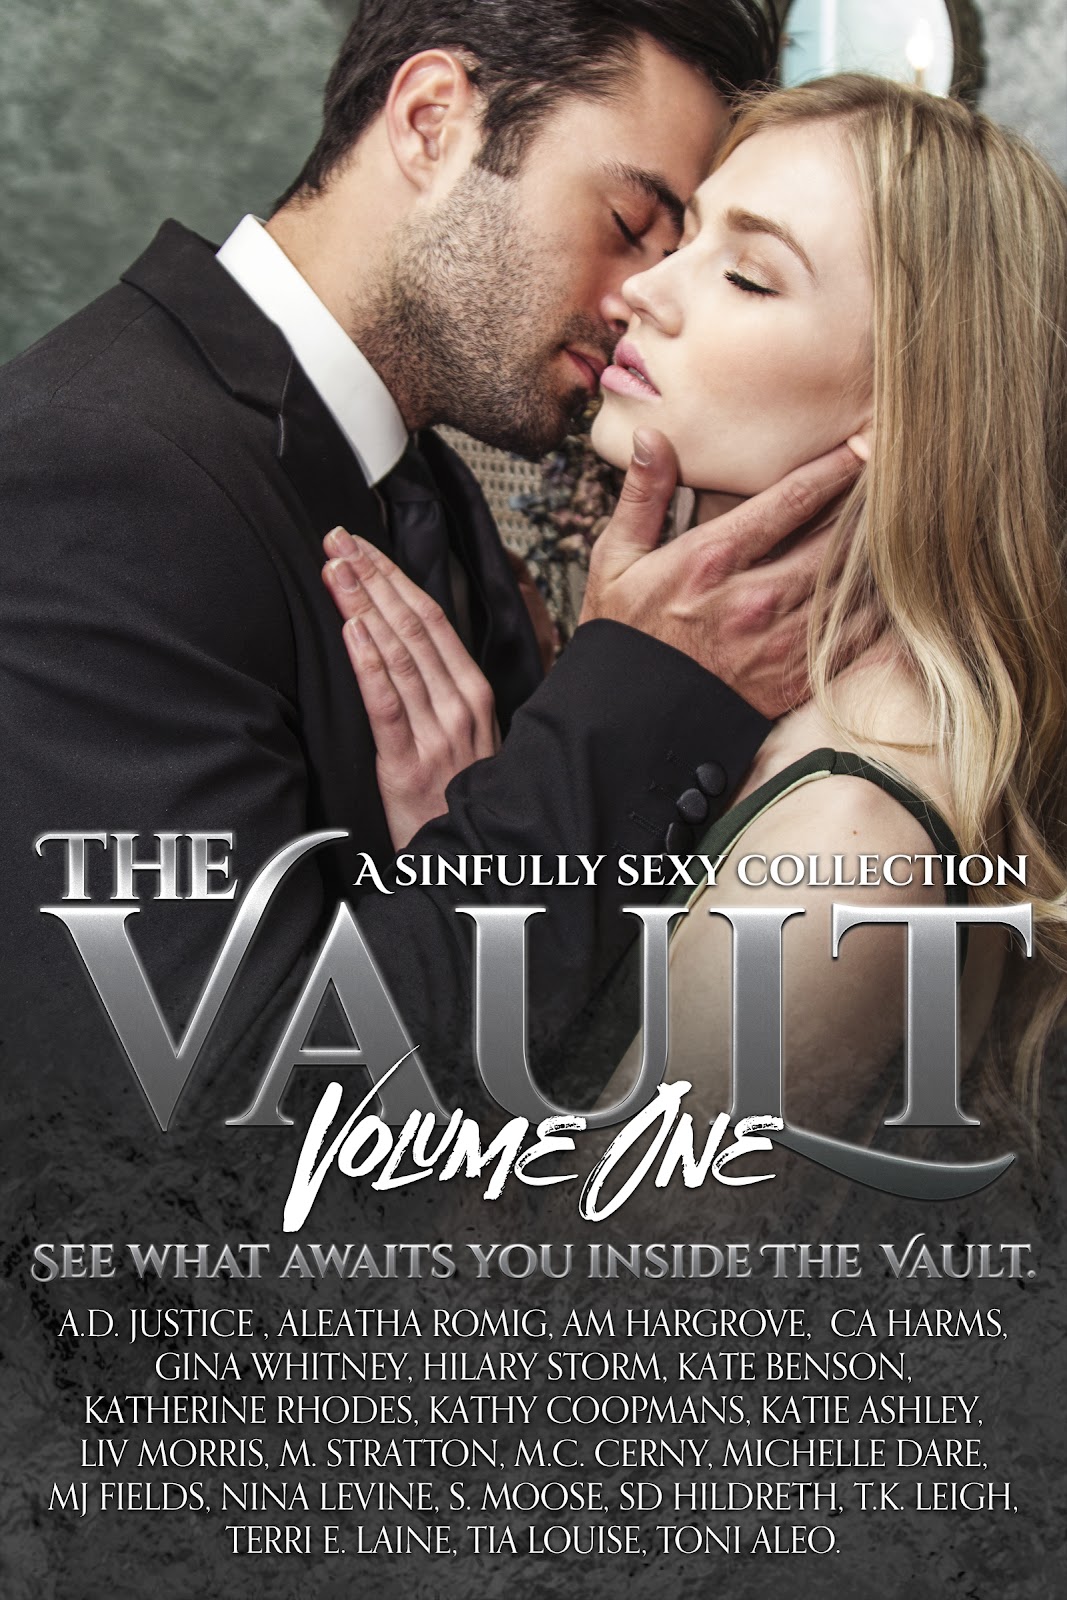 The Vault Vol 1 eBook[2].jpg